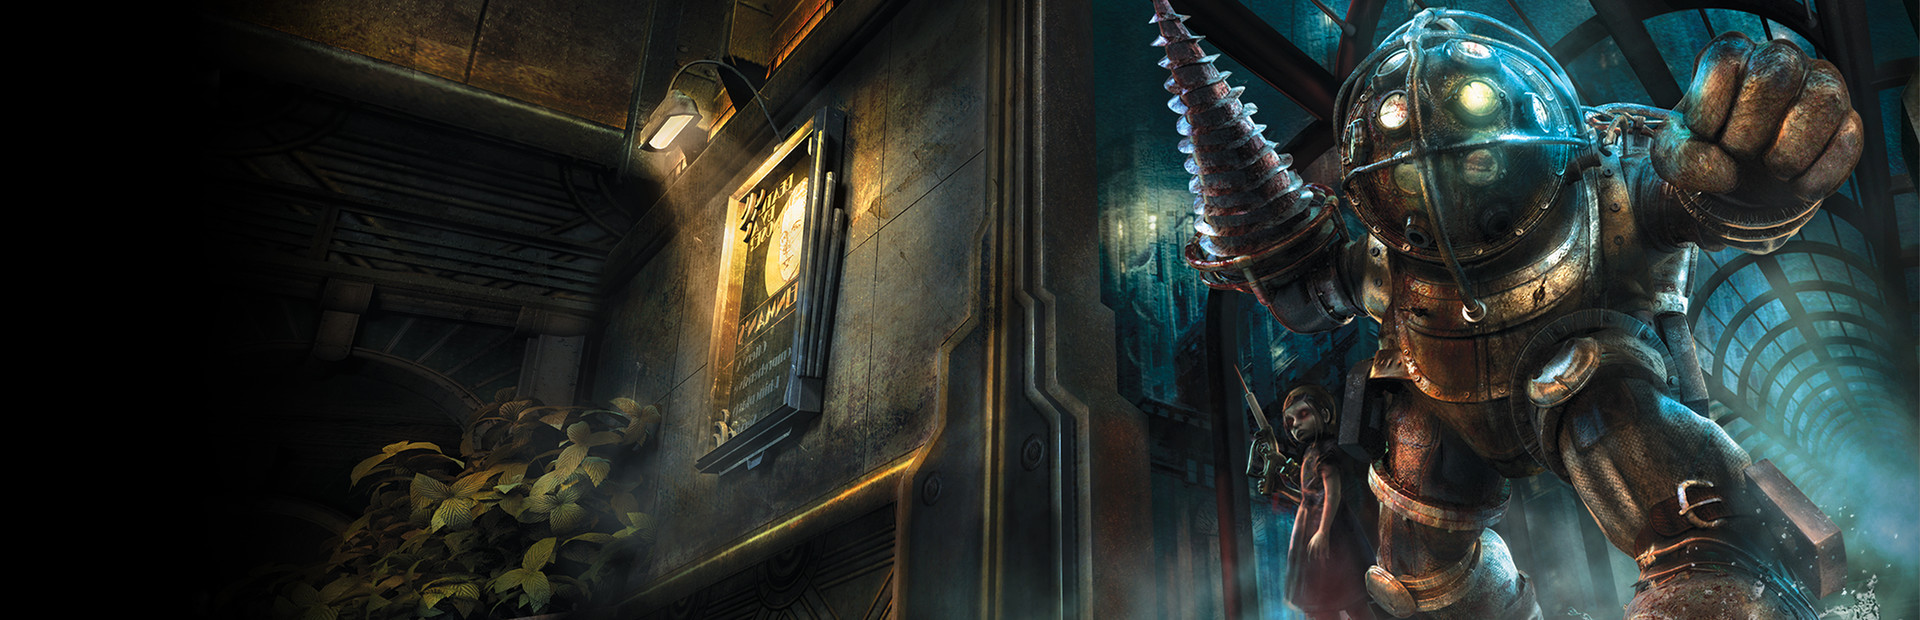 BioShock™ Remastered cover image